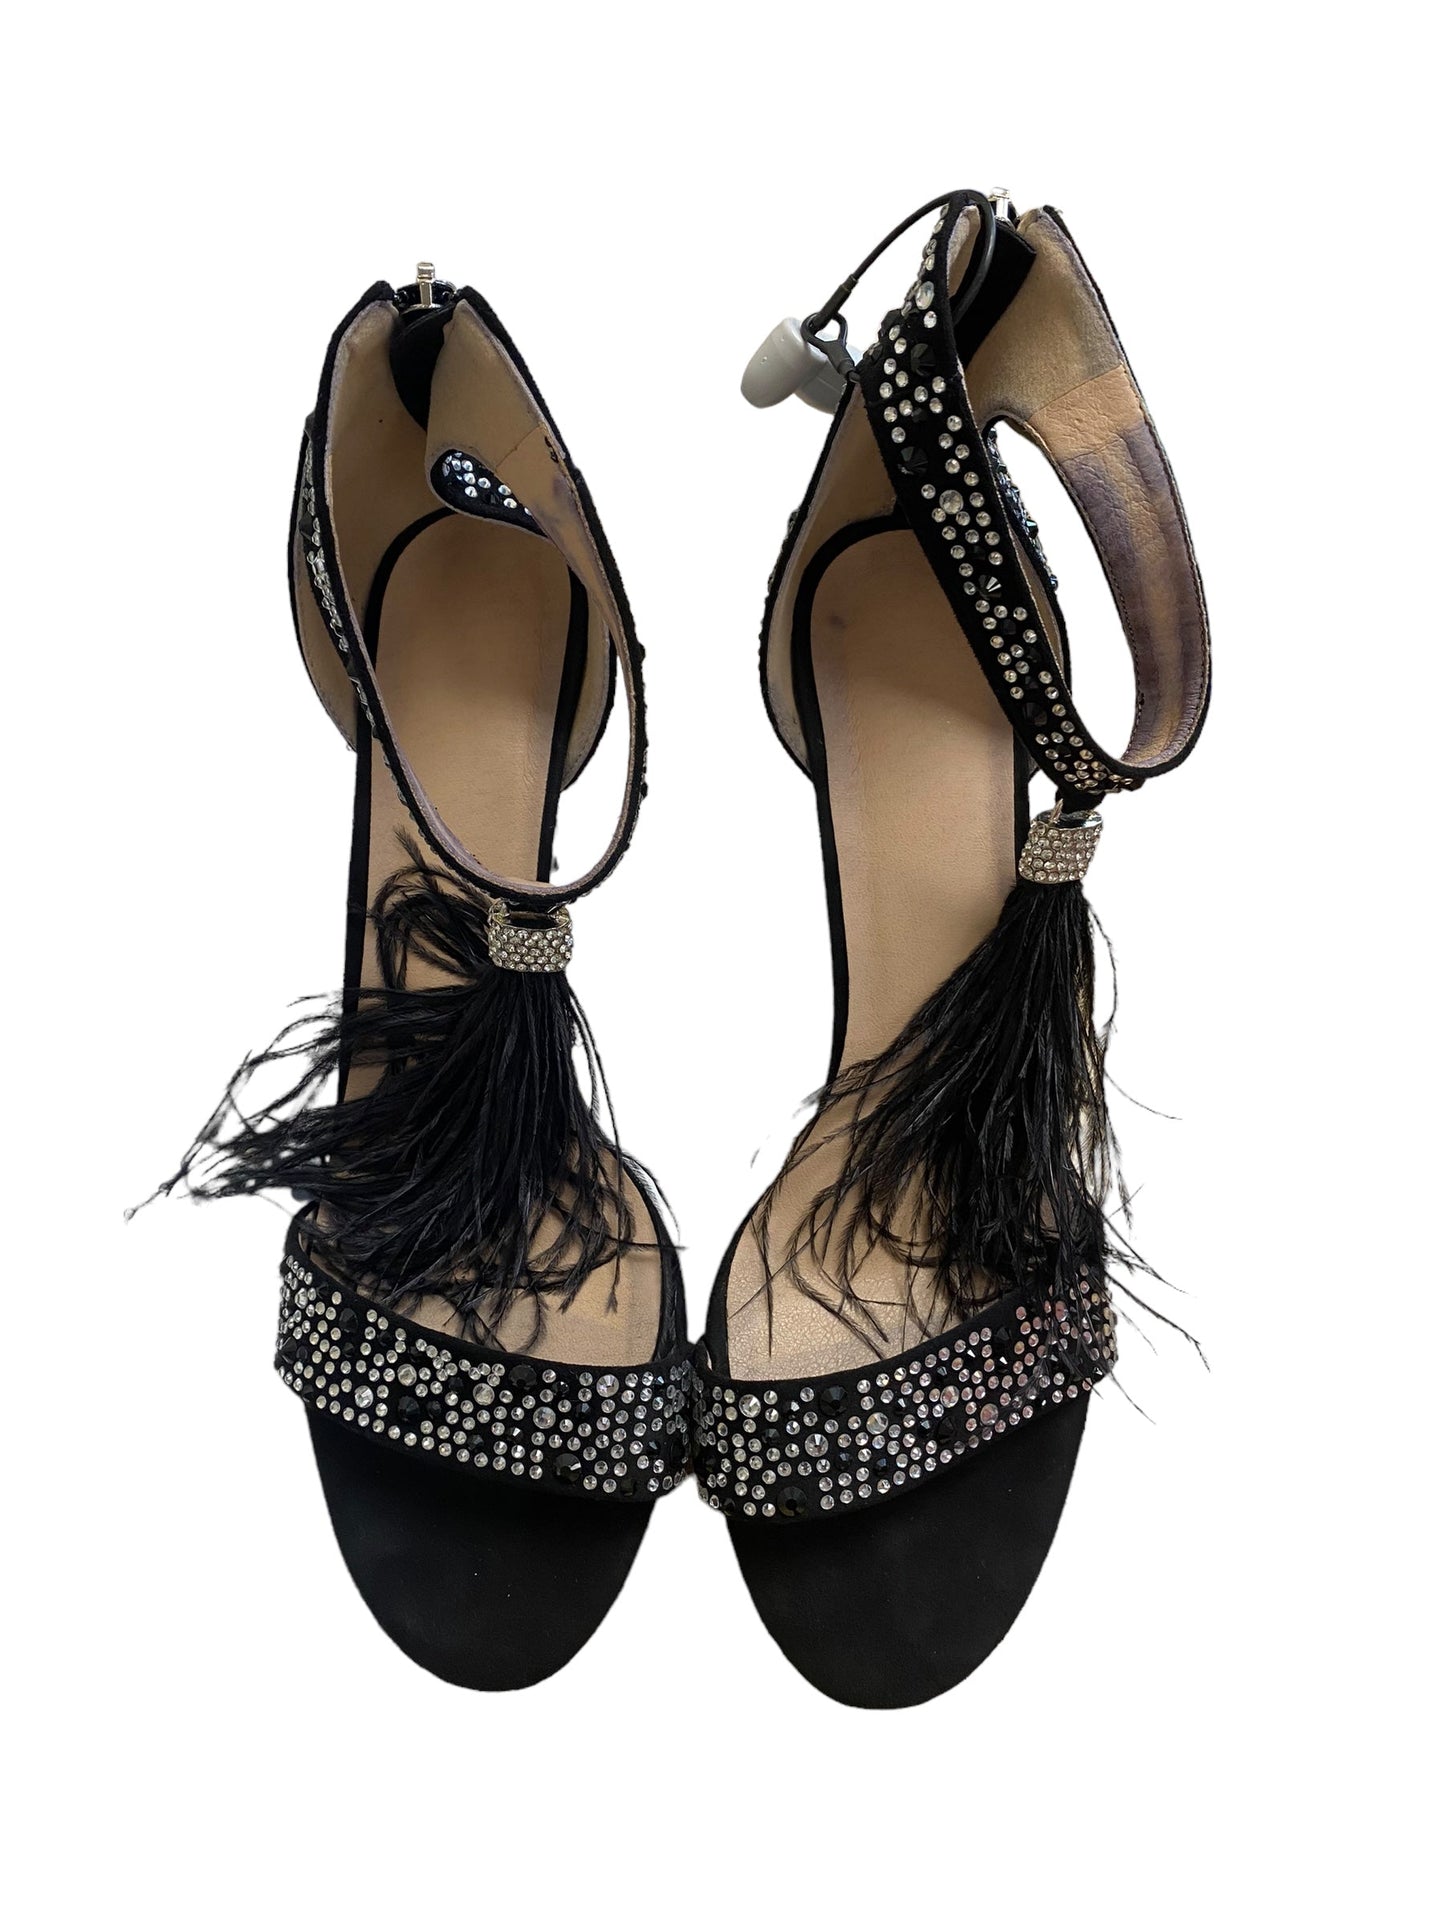 Black Shoes Heels Stiletto Clothes Mentor, Size 12